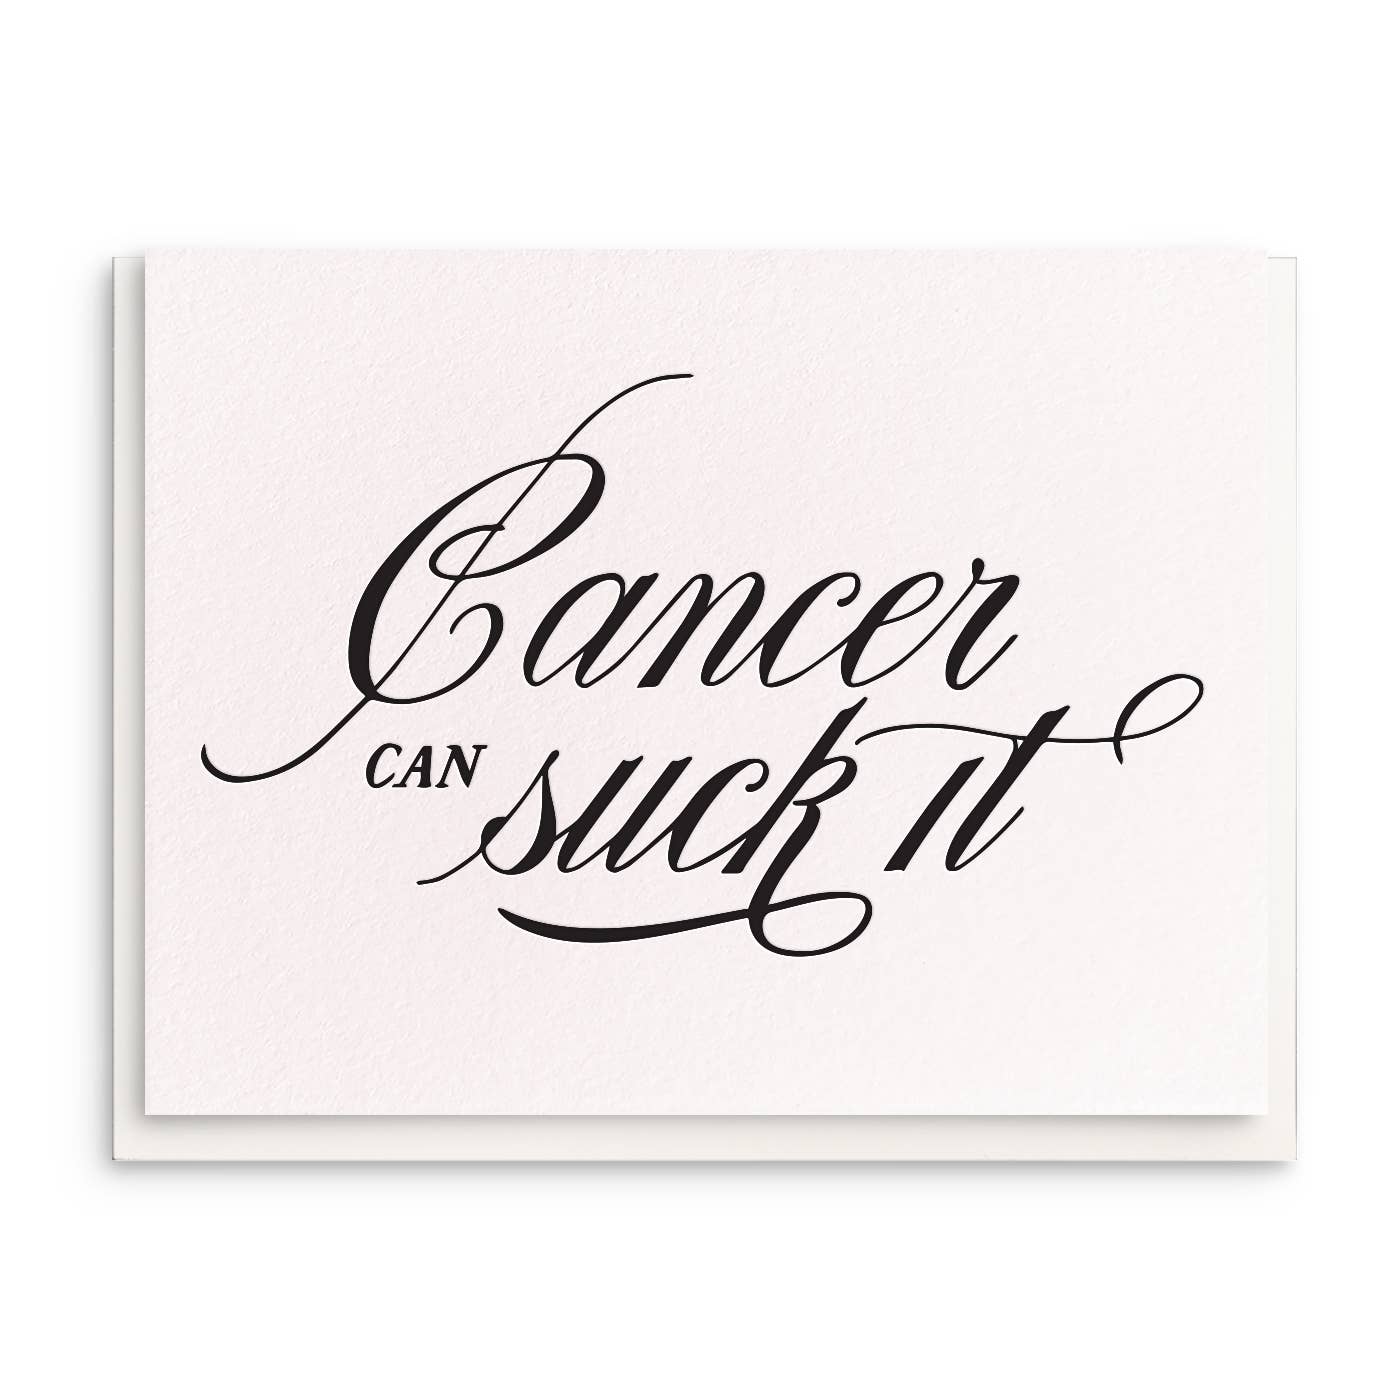 Cancer Sucks - Letterpress Sympathy Greeting Card